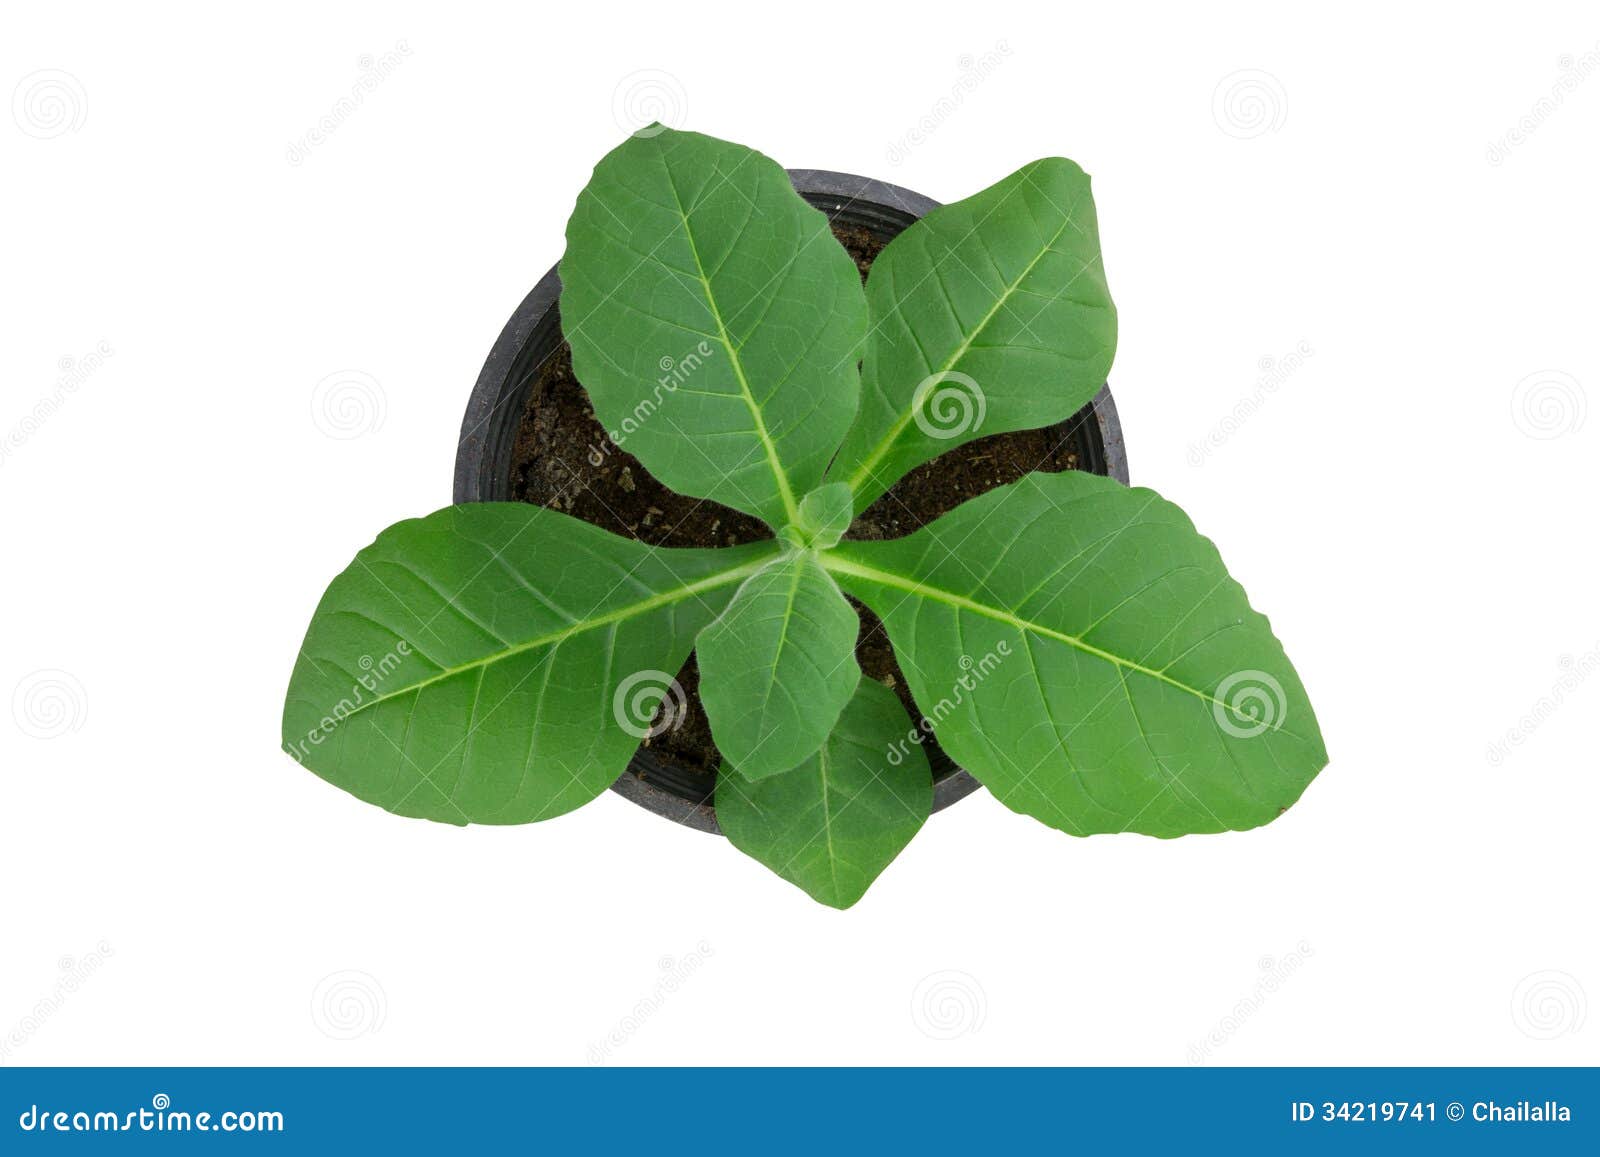 clip art tobacco leaf - photo #45